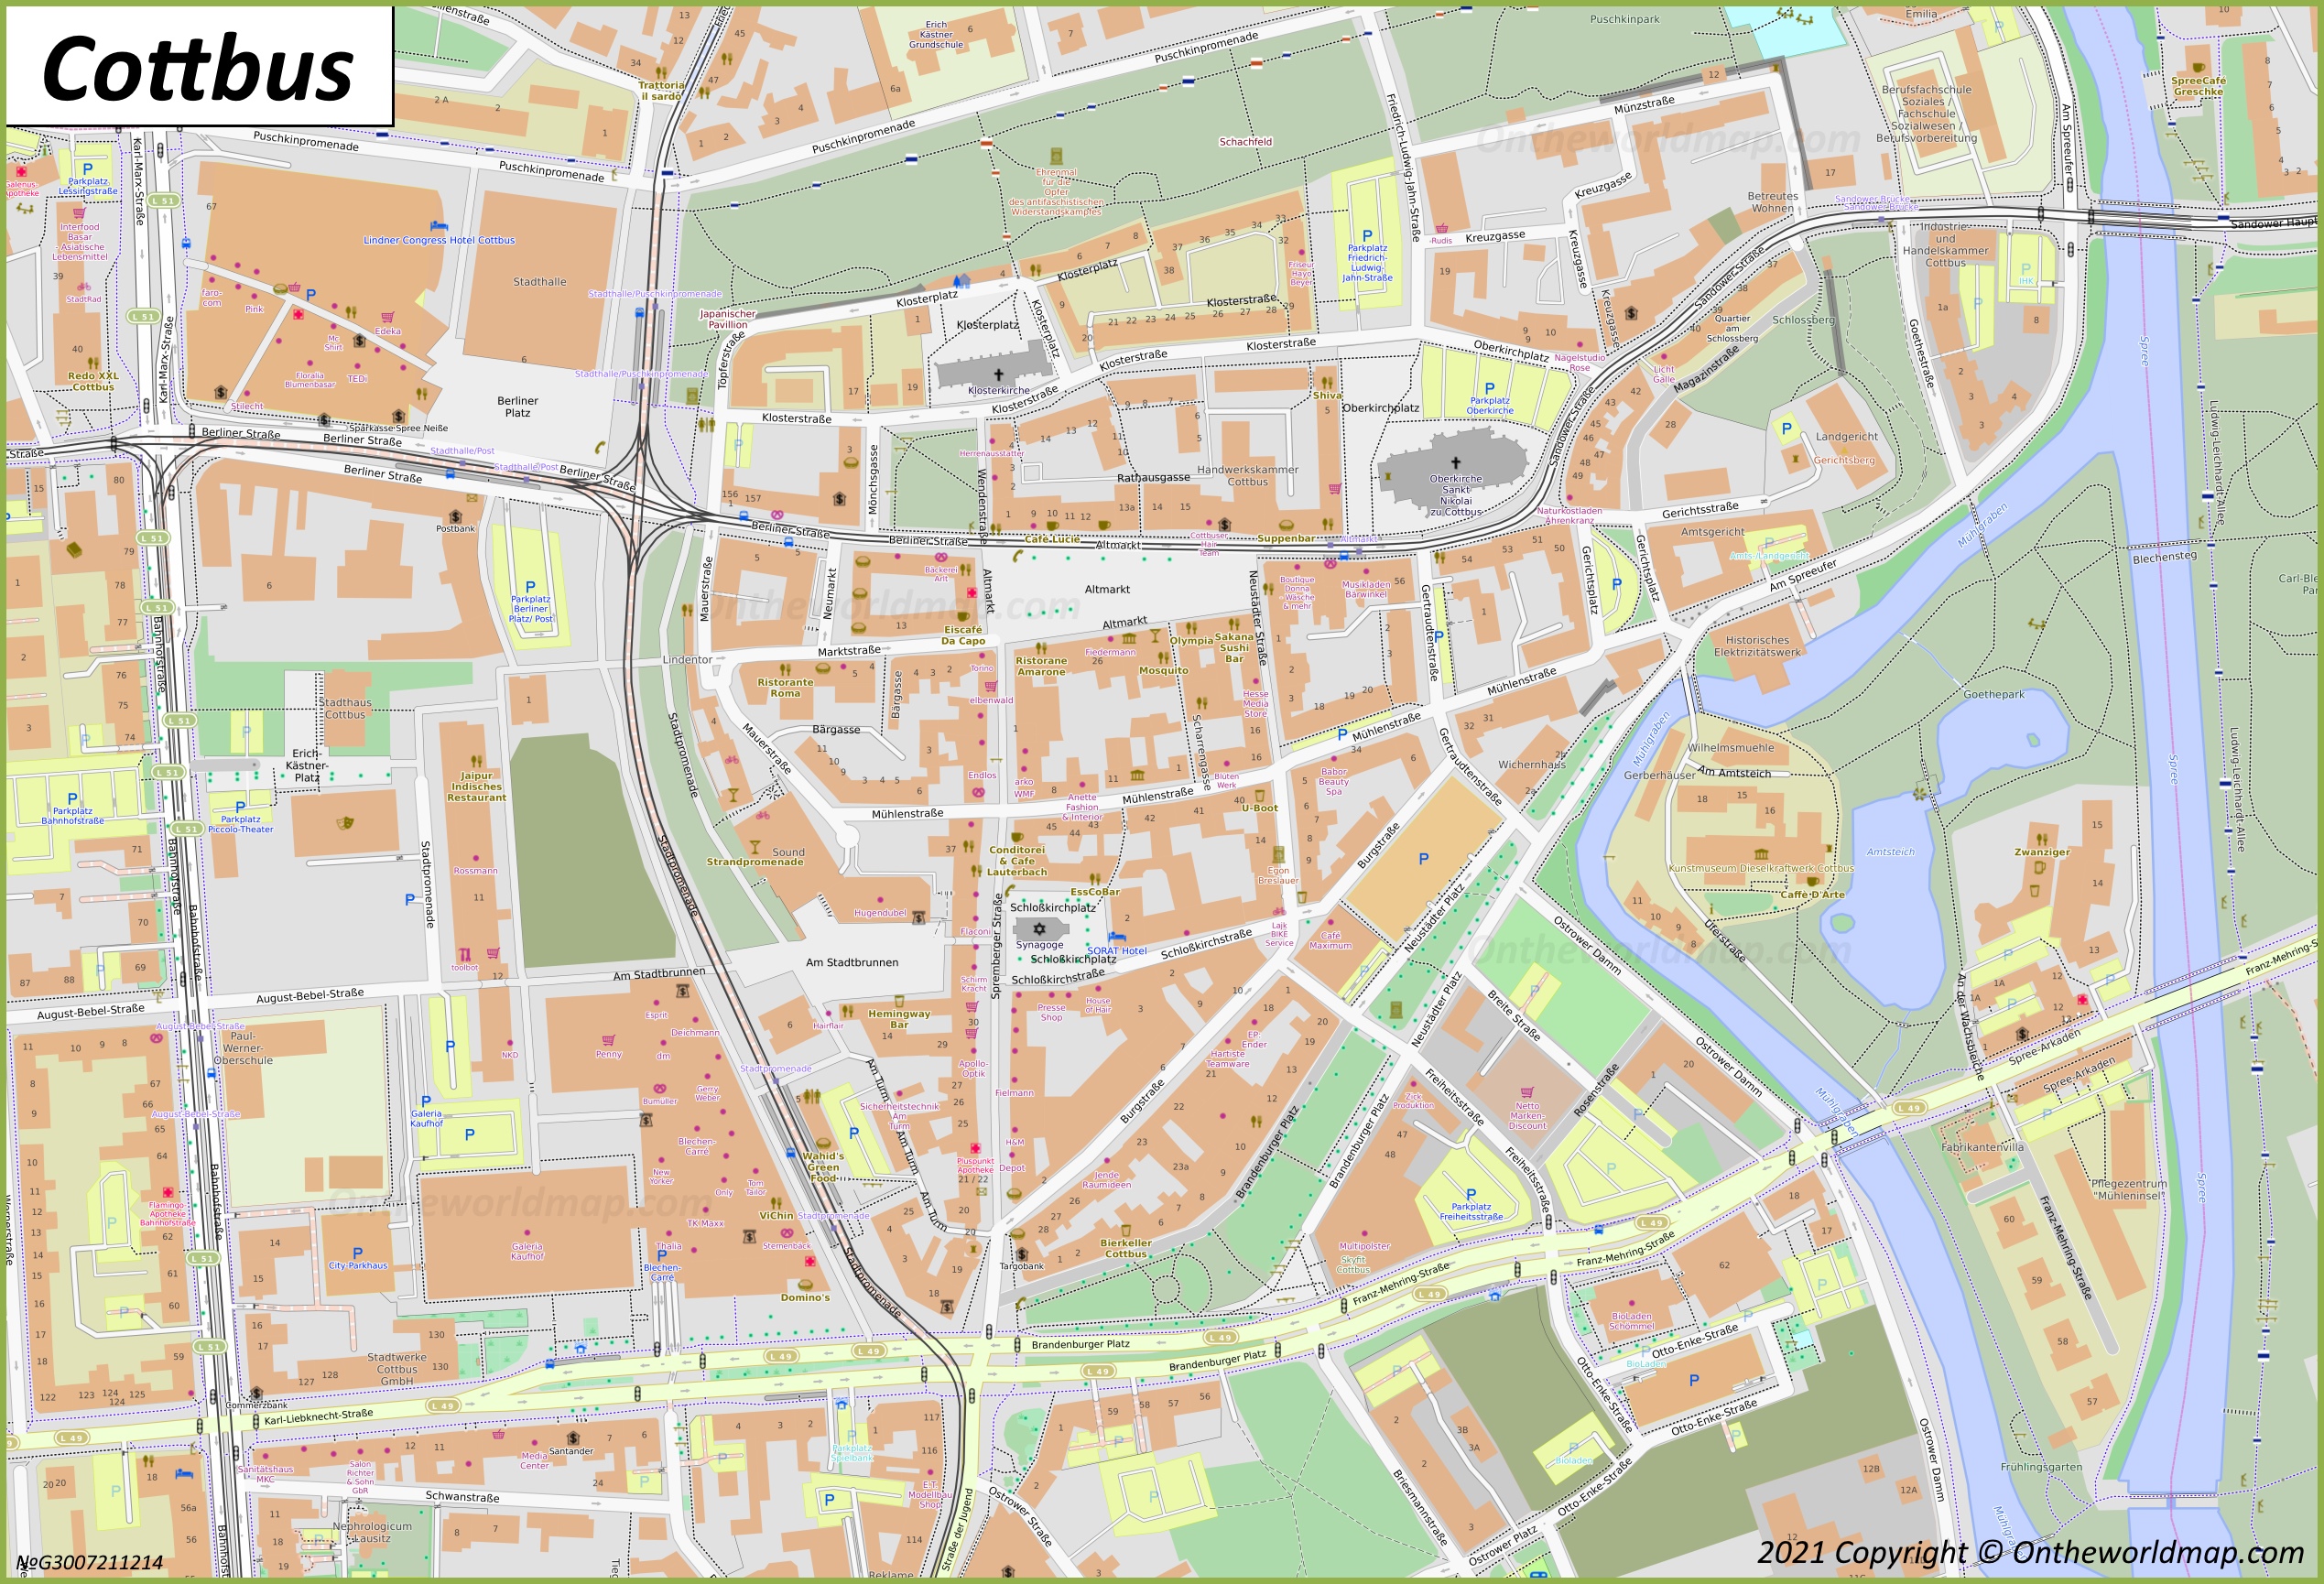 Cottbus Old Town Map